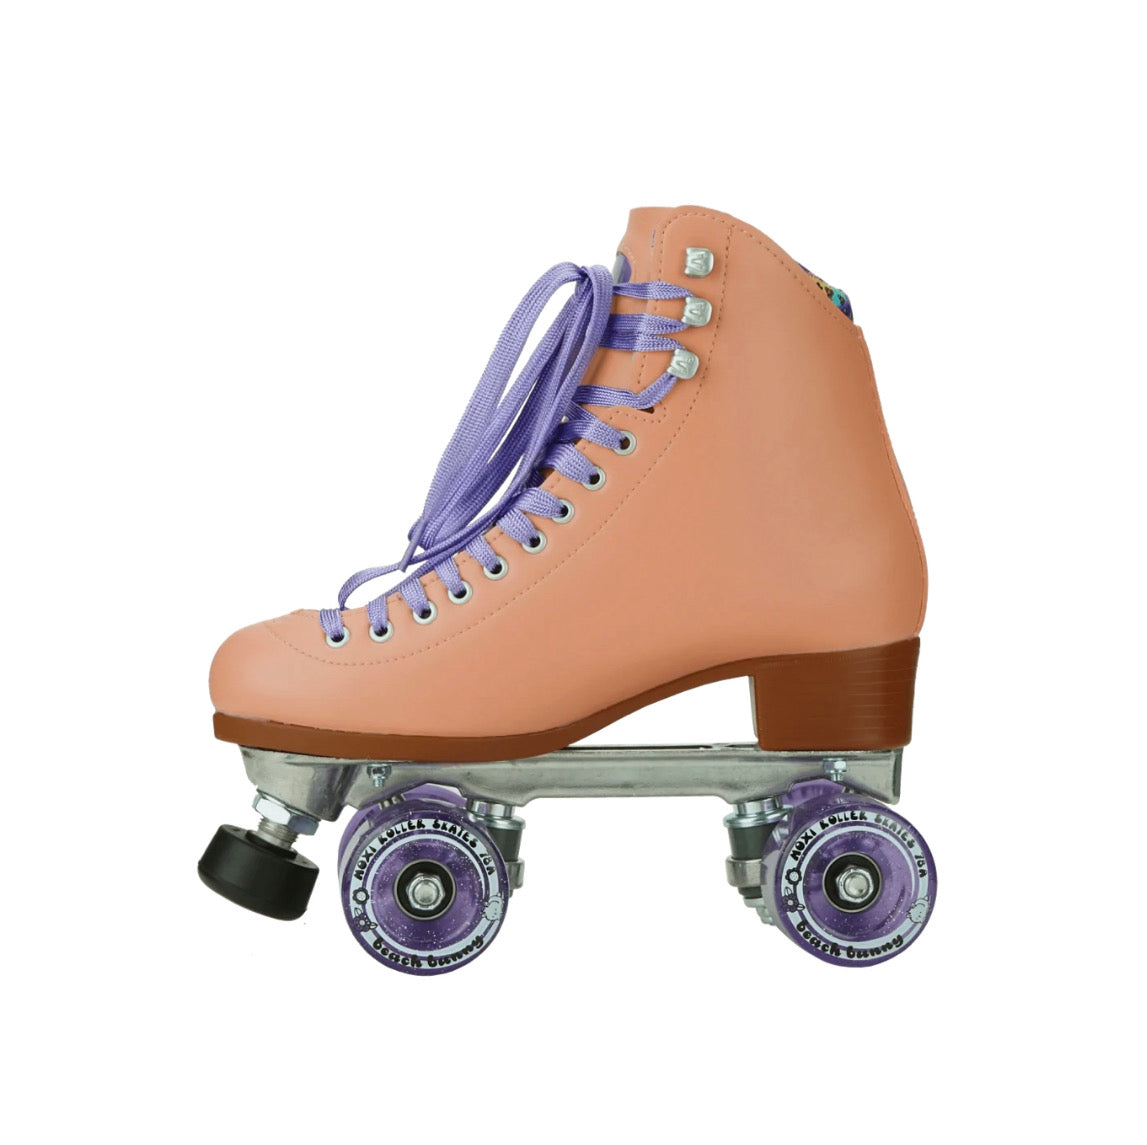 Moxi Beach Bunny Roller Skates - Peach